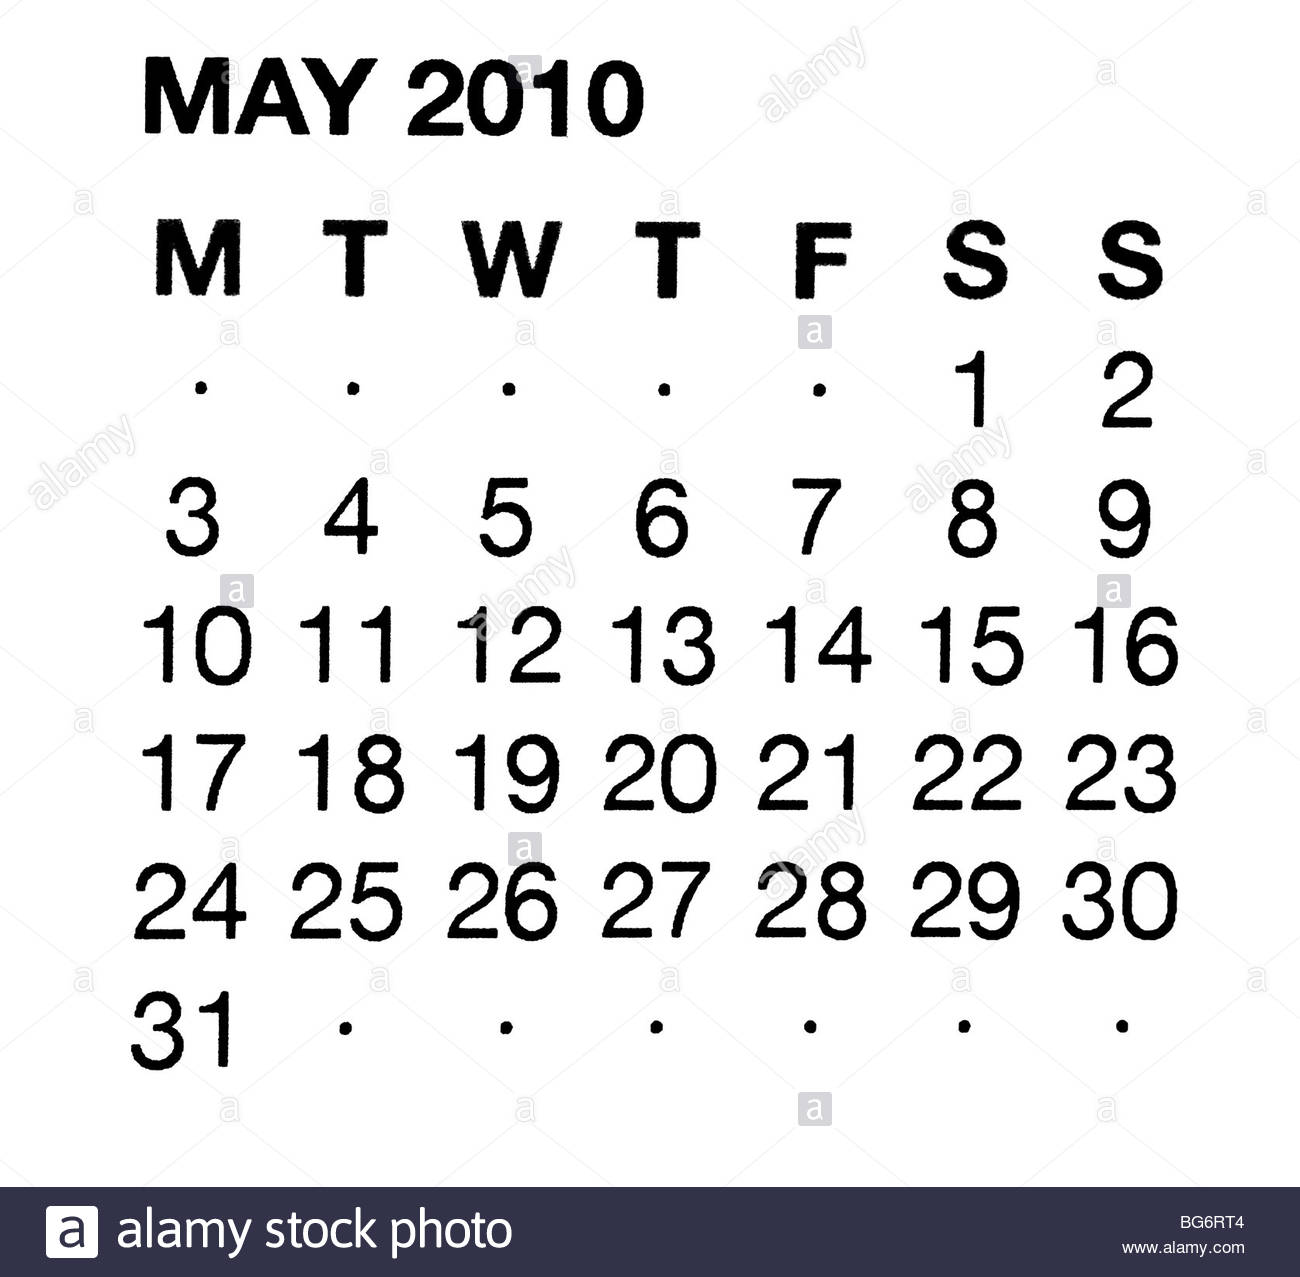 May 2010 calendar Stock Photo